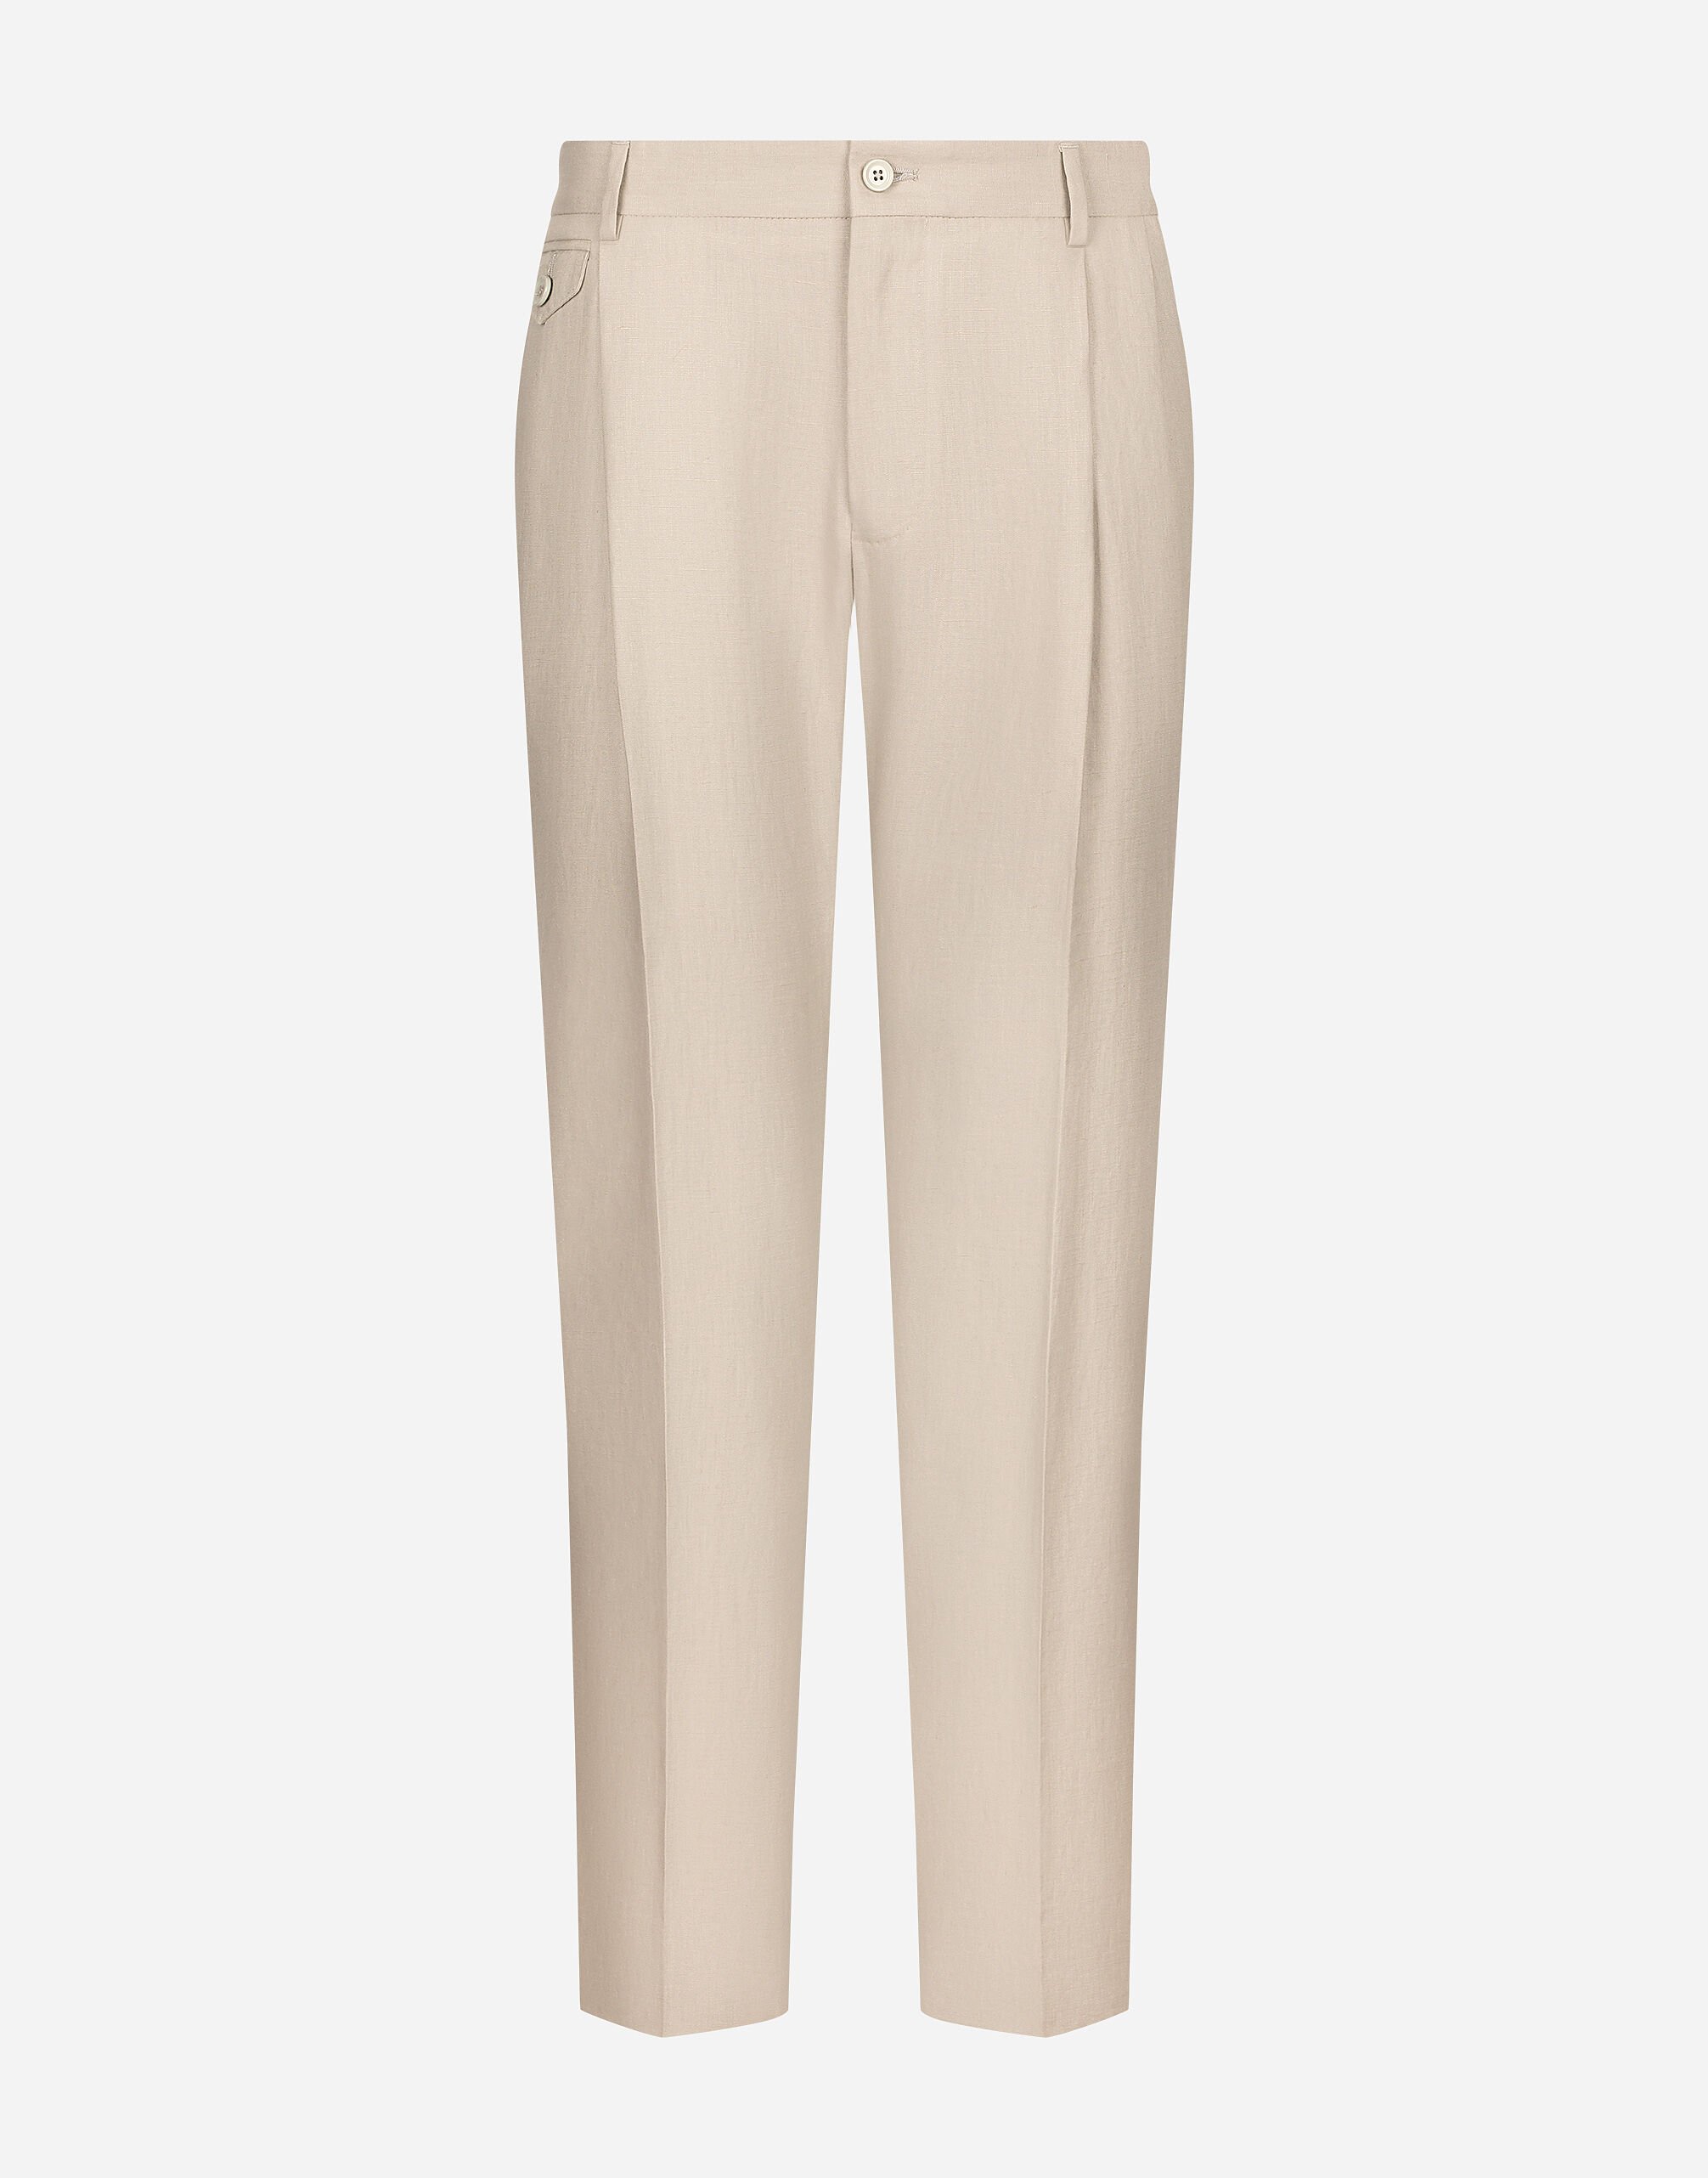 Dolce & Gabbana سروال كتان بخصر مرن بيج هافان VG446EVP473